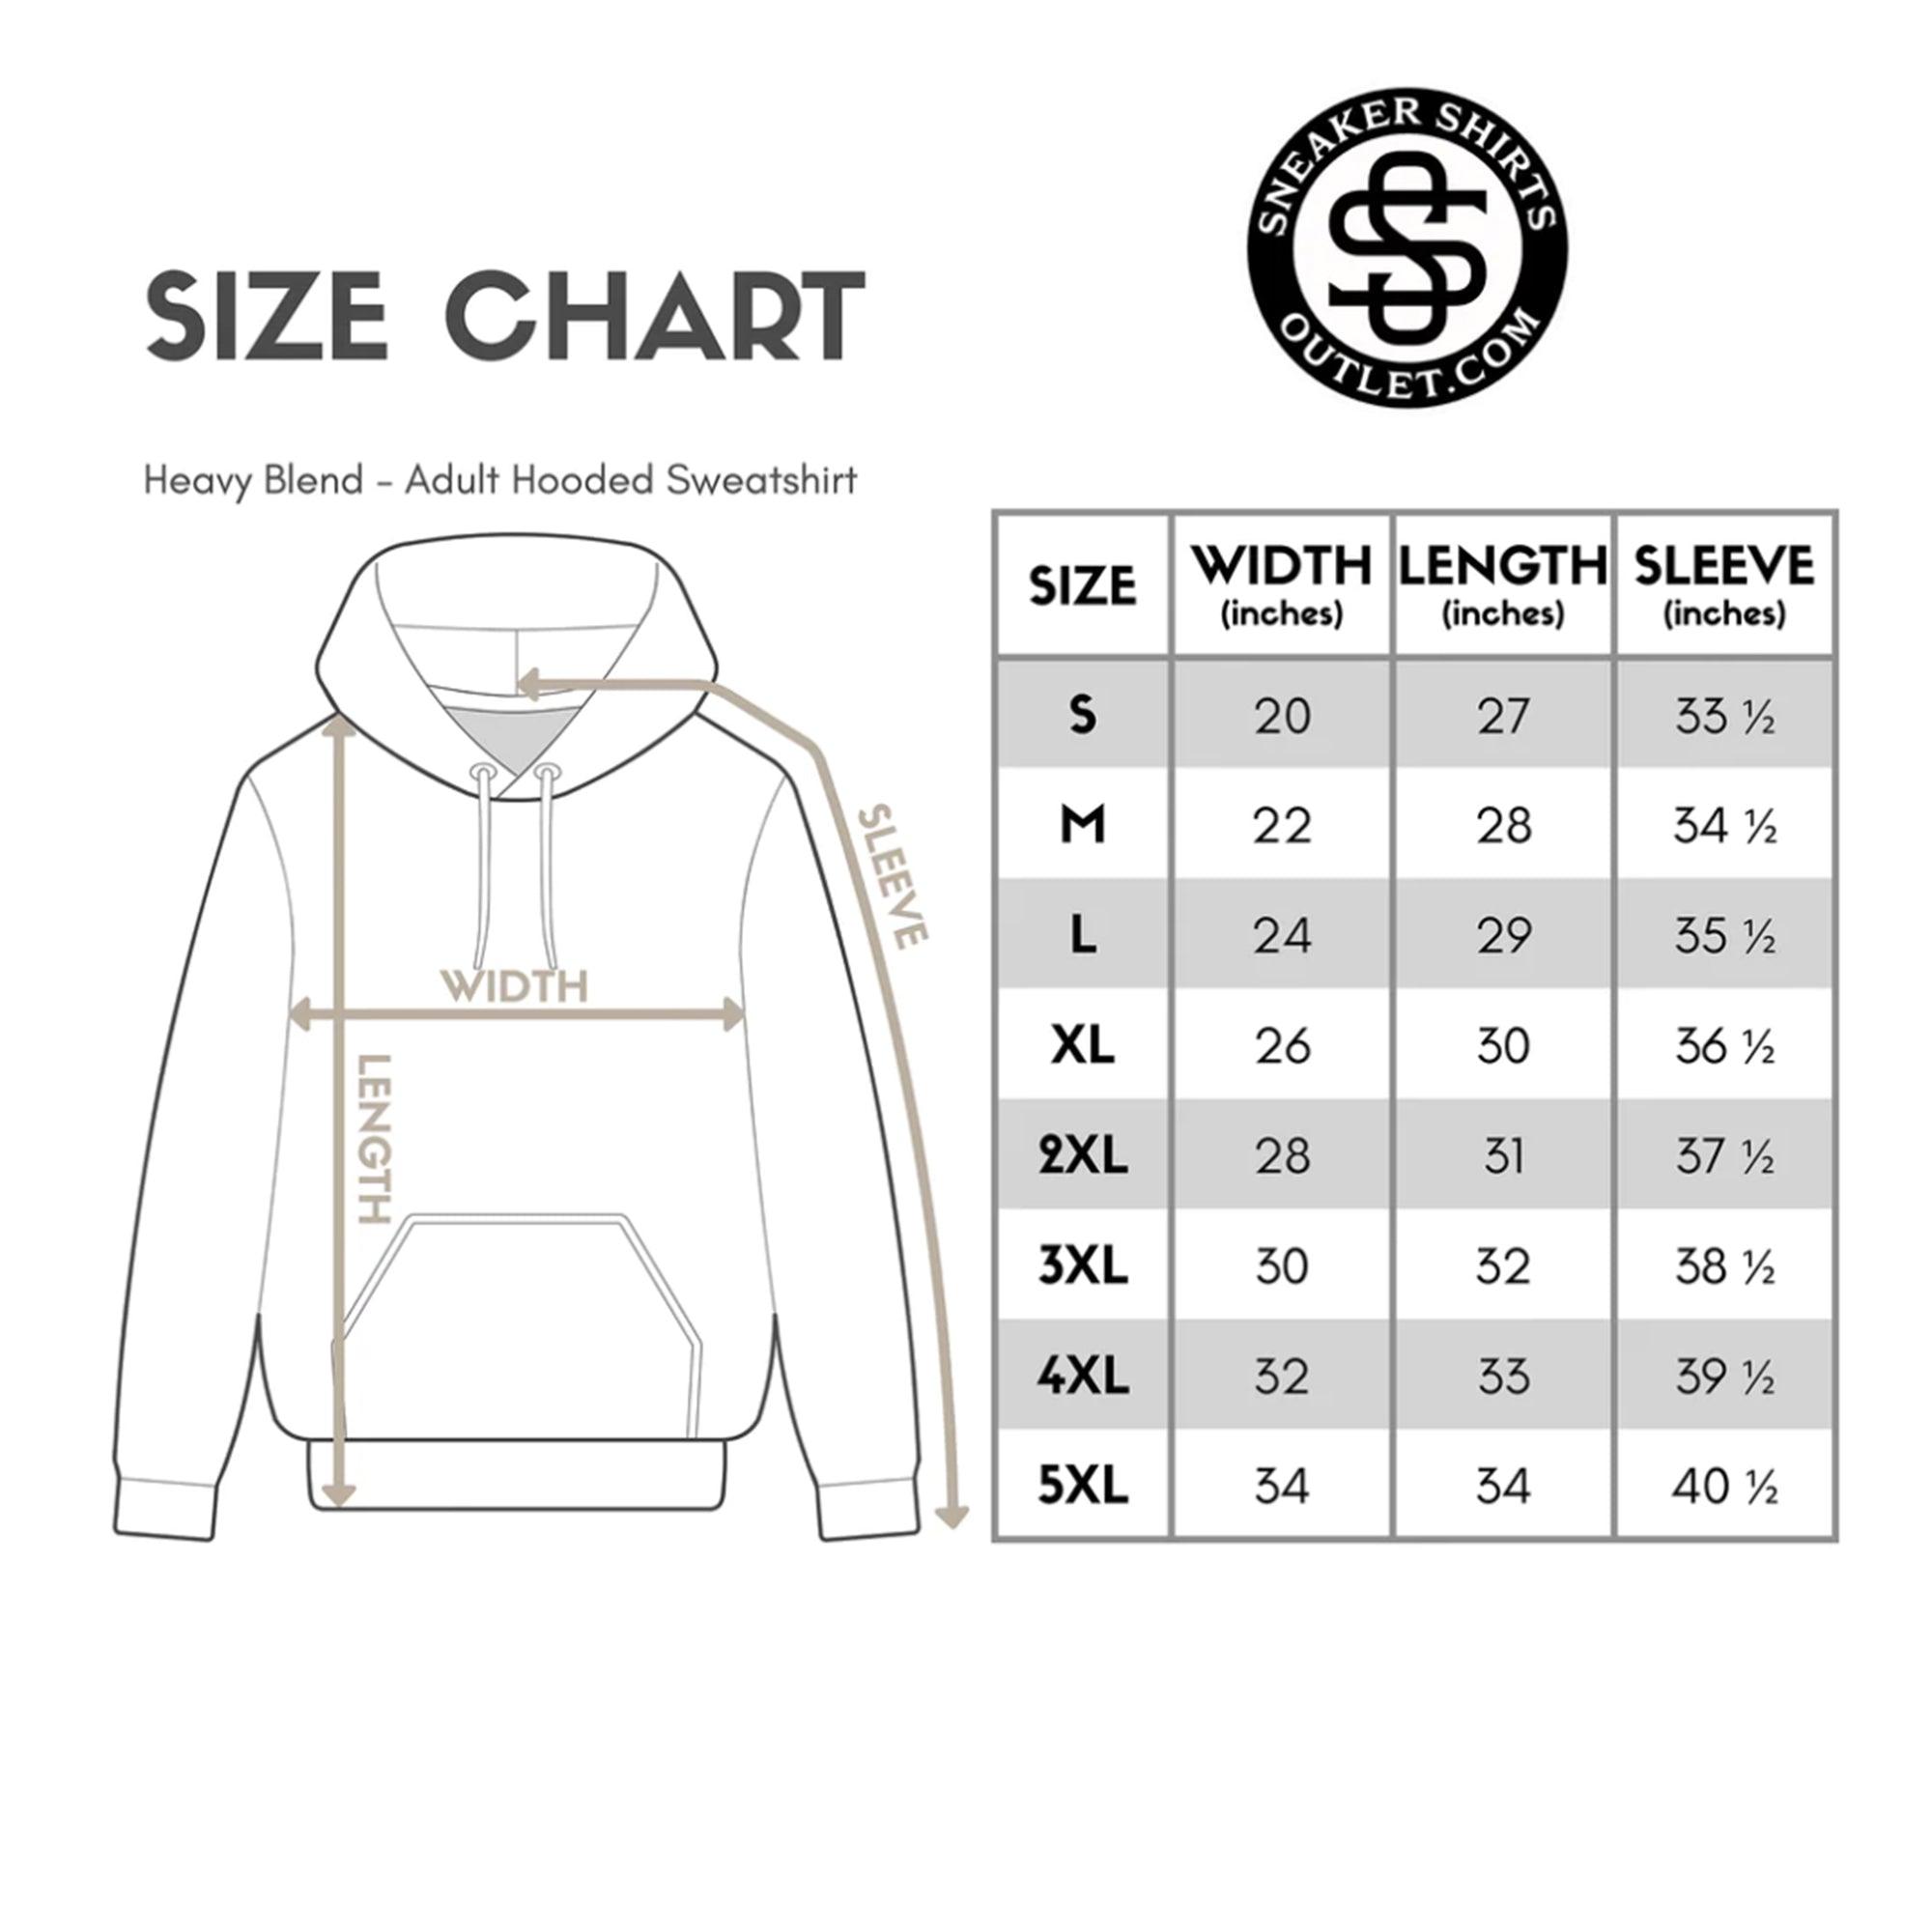 Stay True Hoodie size chart photo